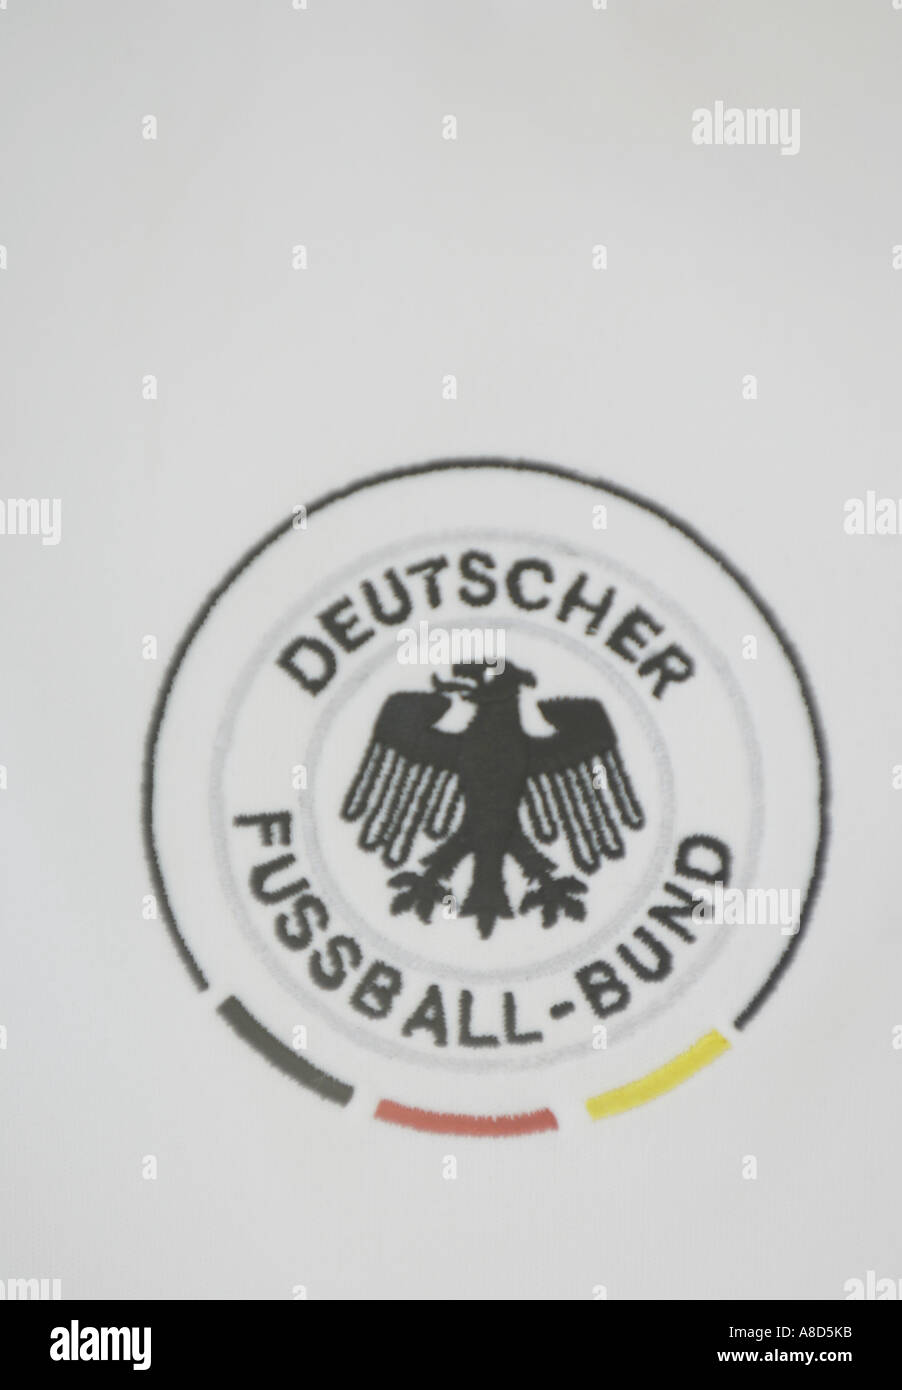 deutsche fussball bund badge crest eagle football kit top shirt white  colour color vertical Stock Photo - Alamy